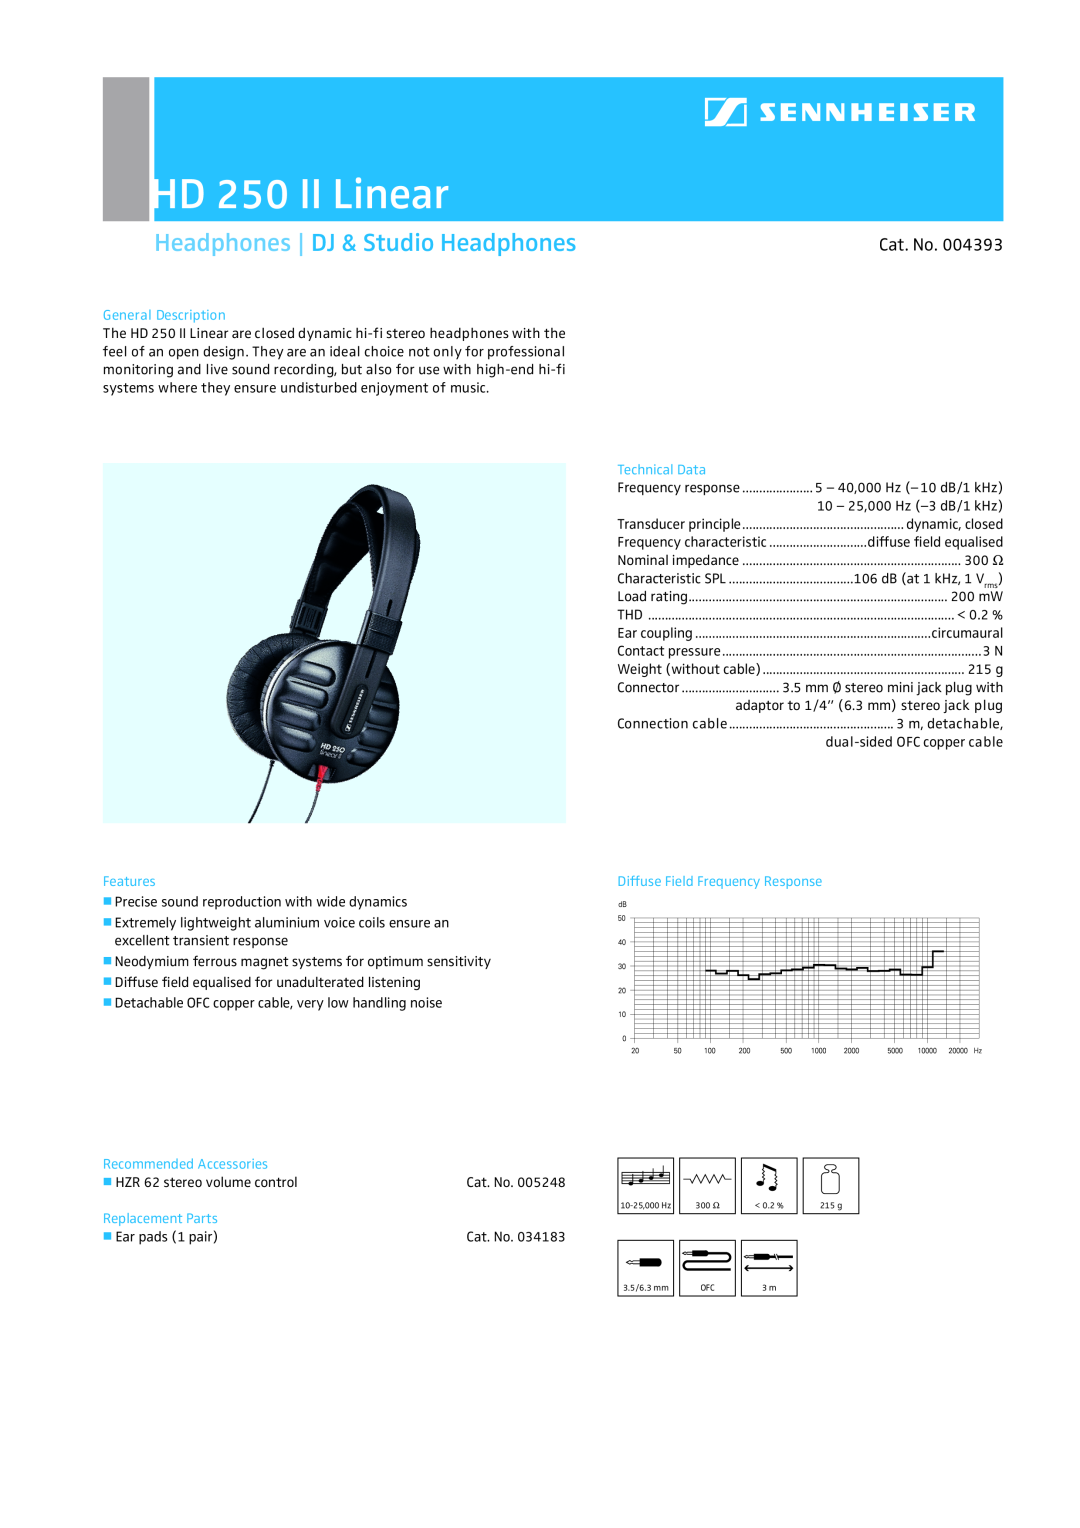 Sennheiser manual HD 250 II Linear, Headphones DJ & Studio Headphones, Cat. No, General Description, Technical Data 